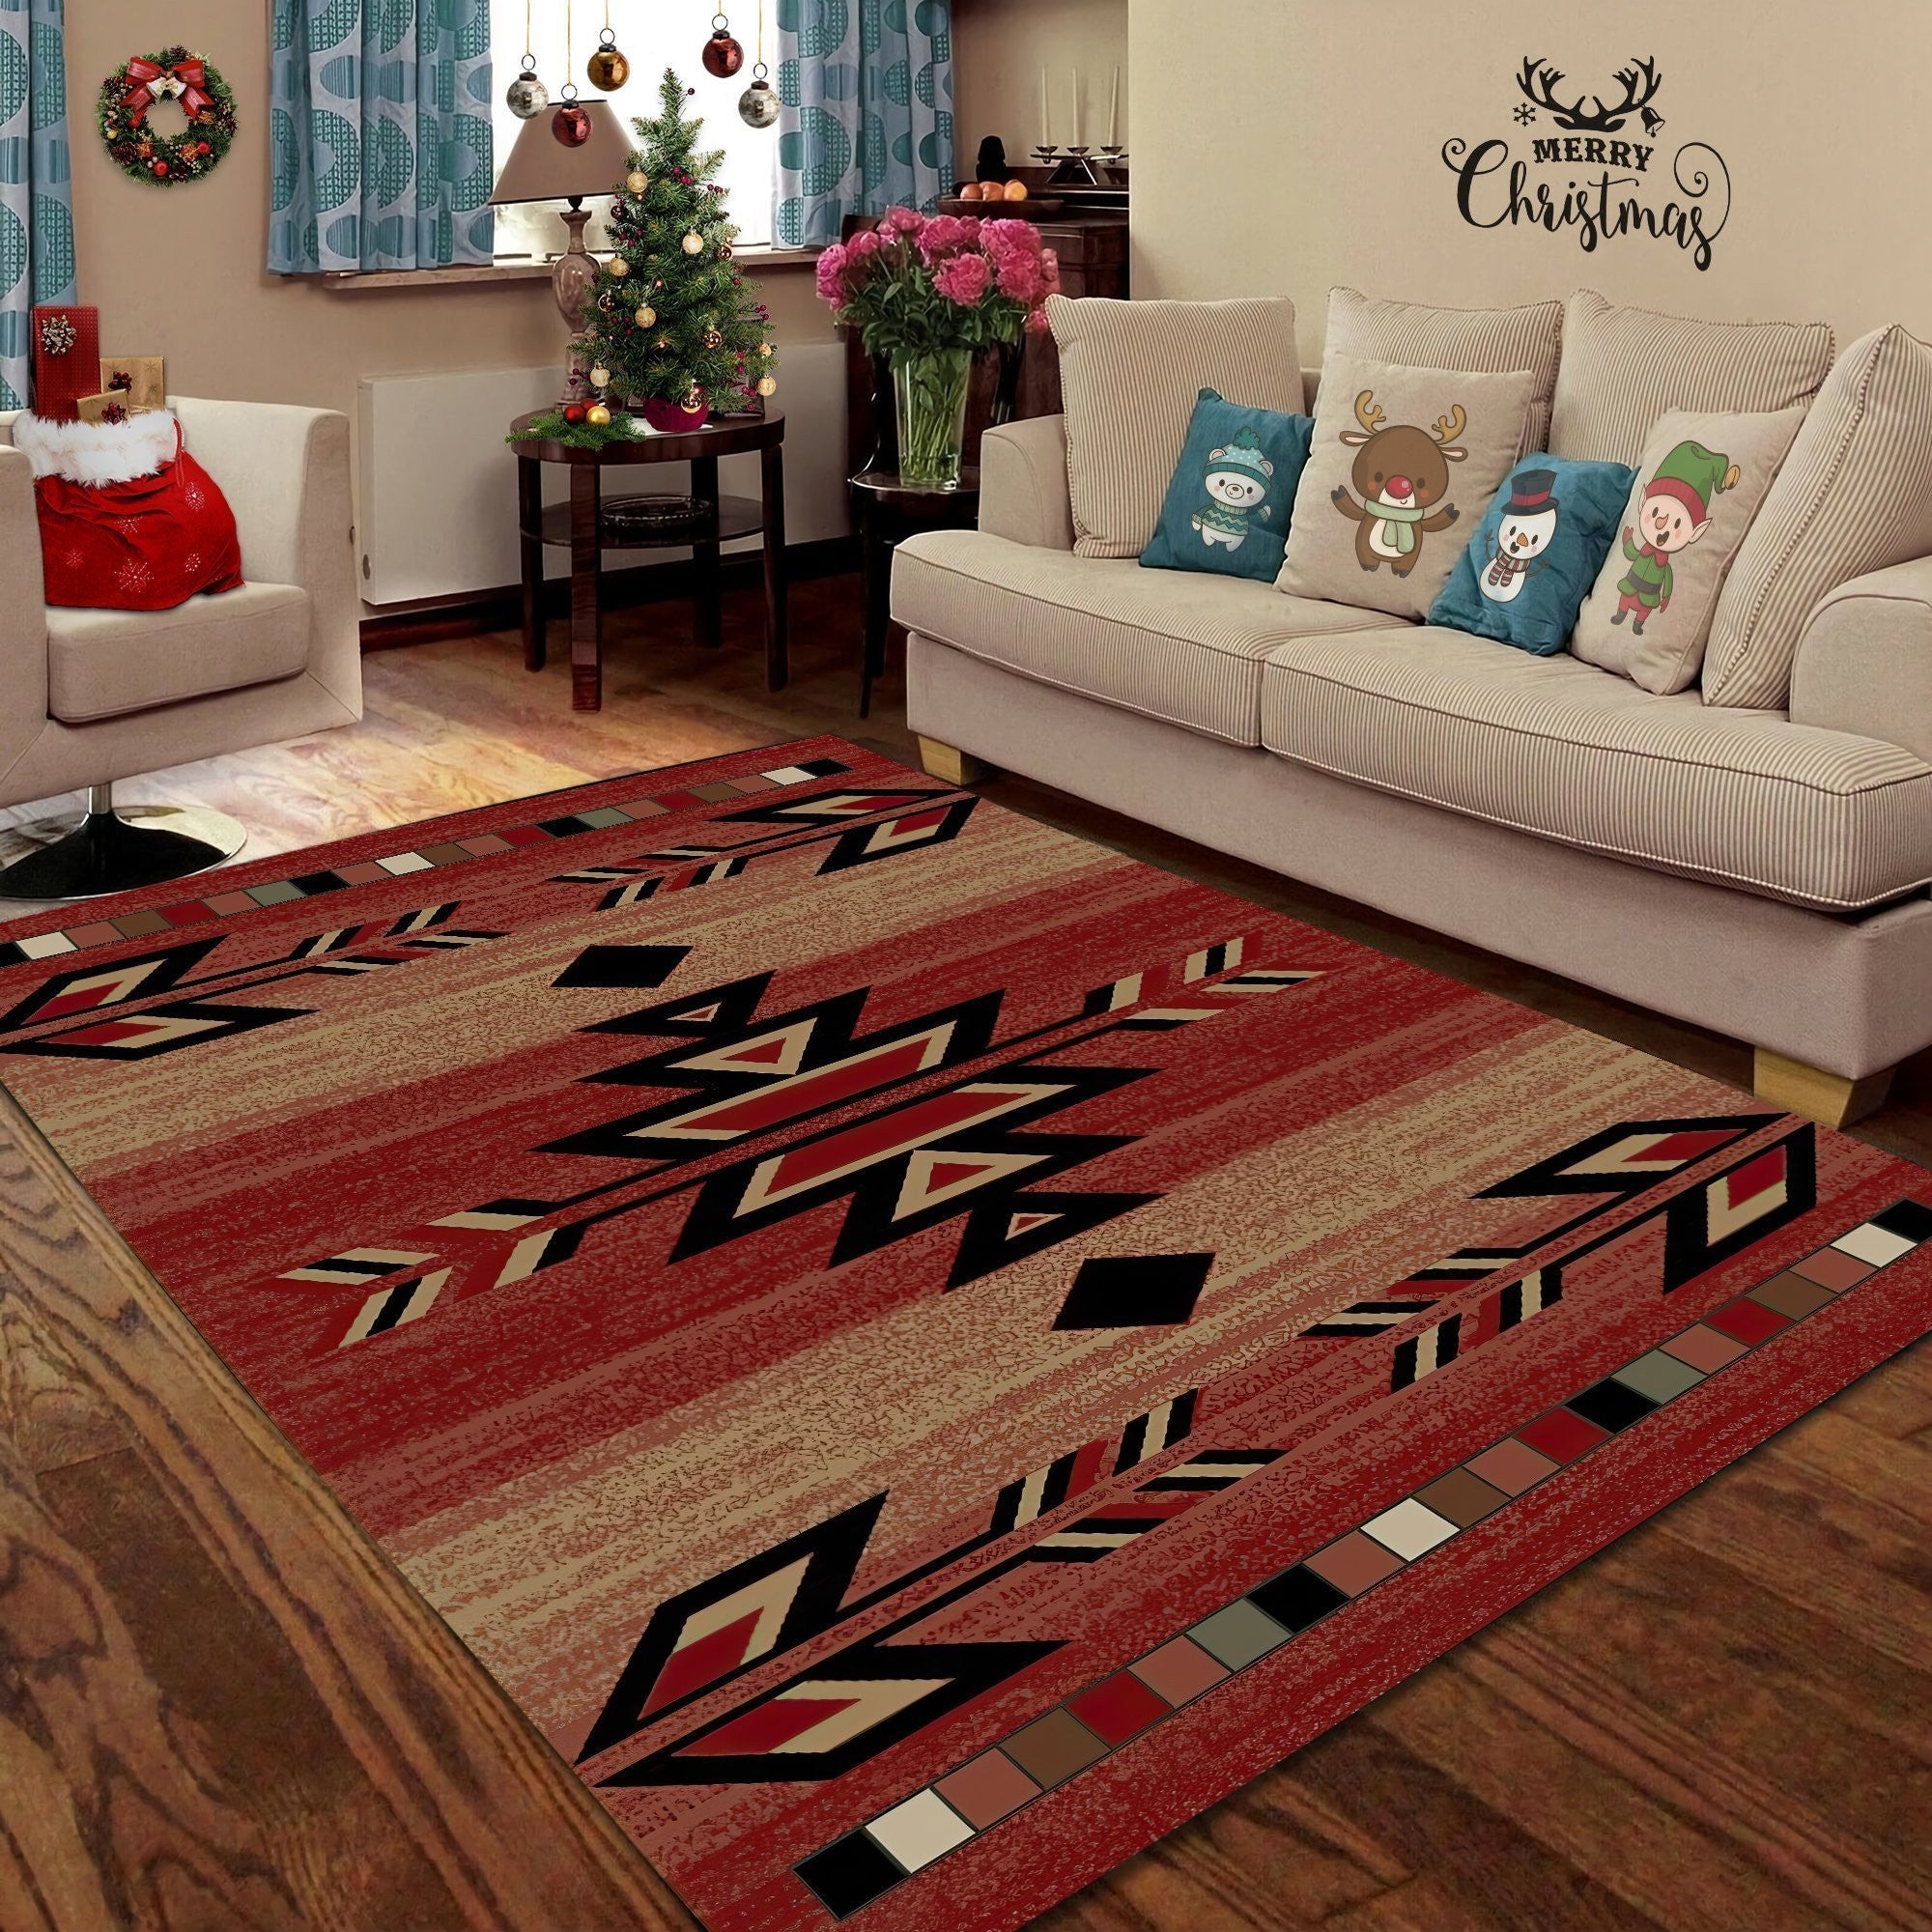 native-american-pattern-native-america-all-over-printed-rug